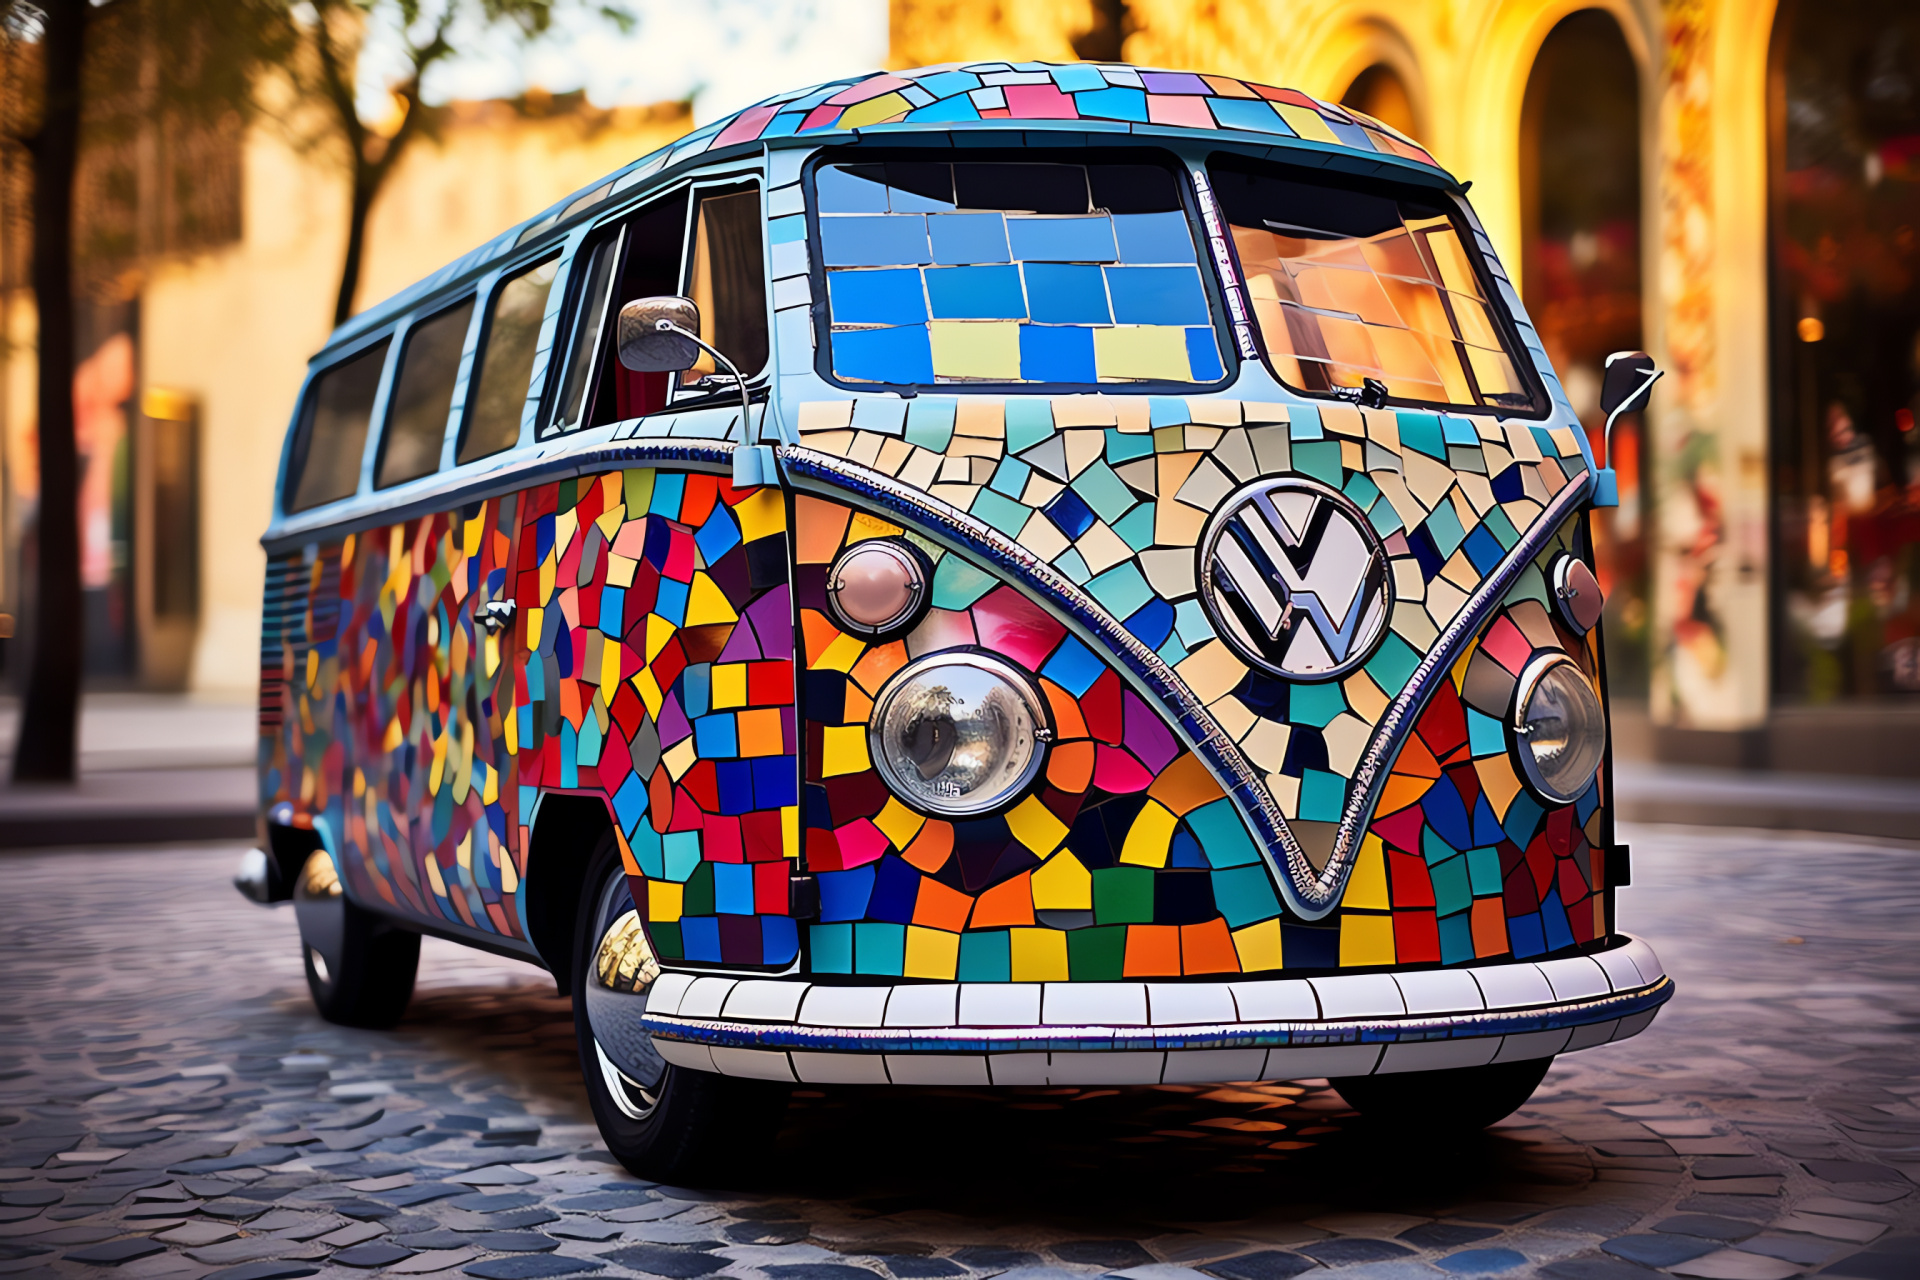 Volkswagen Bus, Spanish cityscape, Art Nouveau influence, distinctive livery, urban environment, HD Desktop Wallpaper